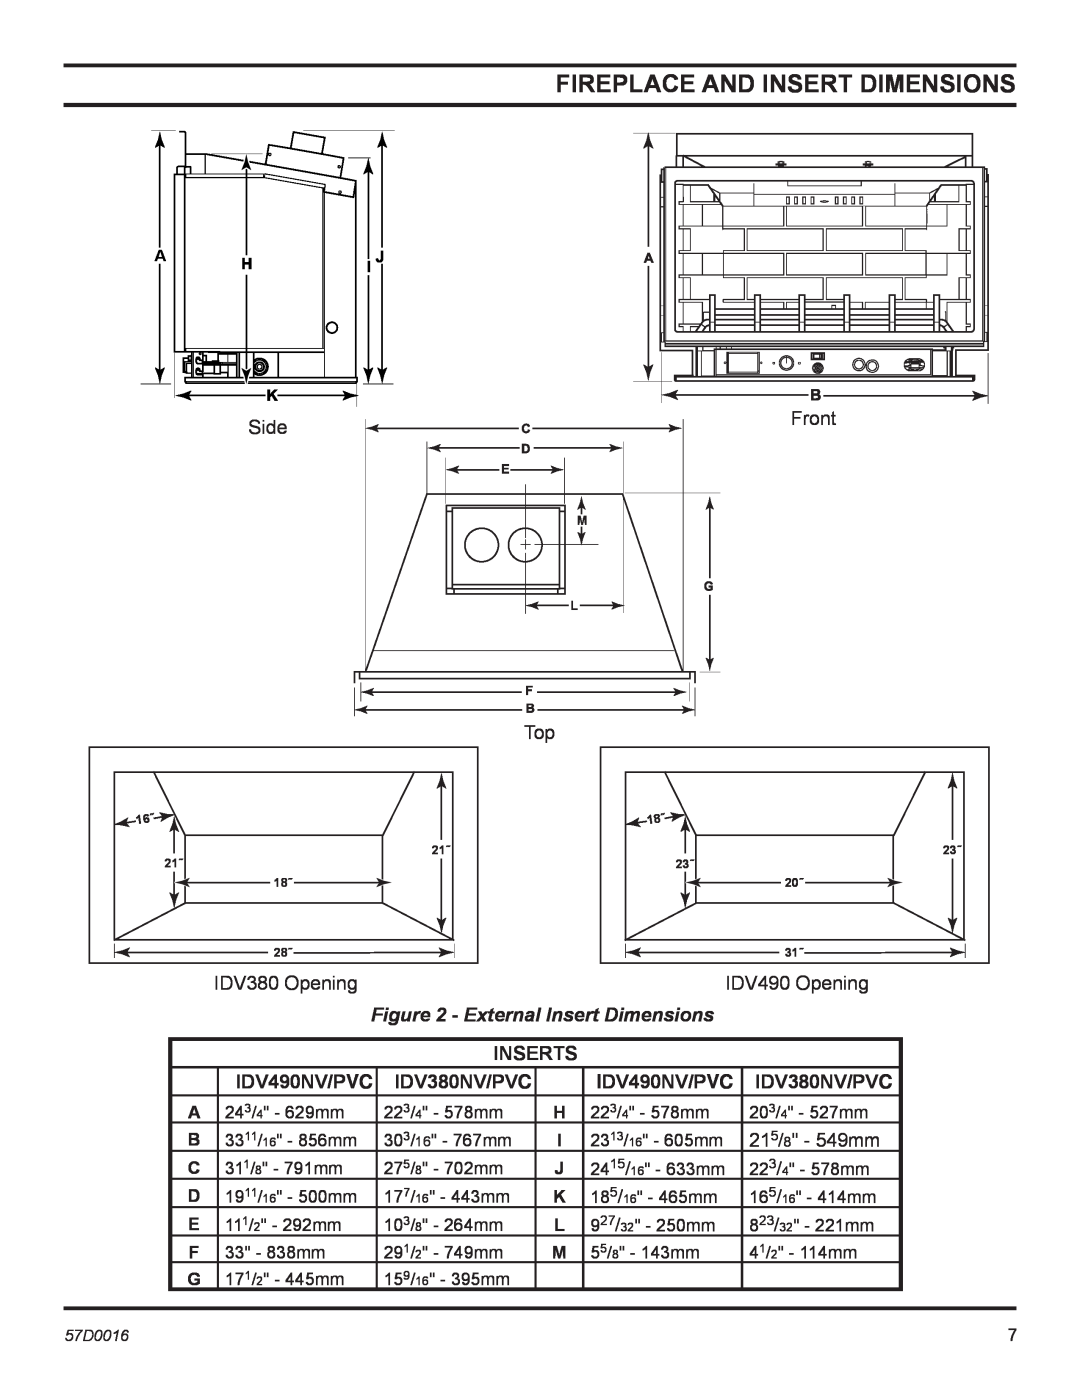 Monessen Hearth IDV380PVC Fireplace And Insert Dimensions, External Insert Dimensions, Inserts, IDV490NV/PVC, IDV380NV/PVC 